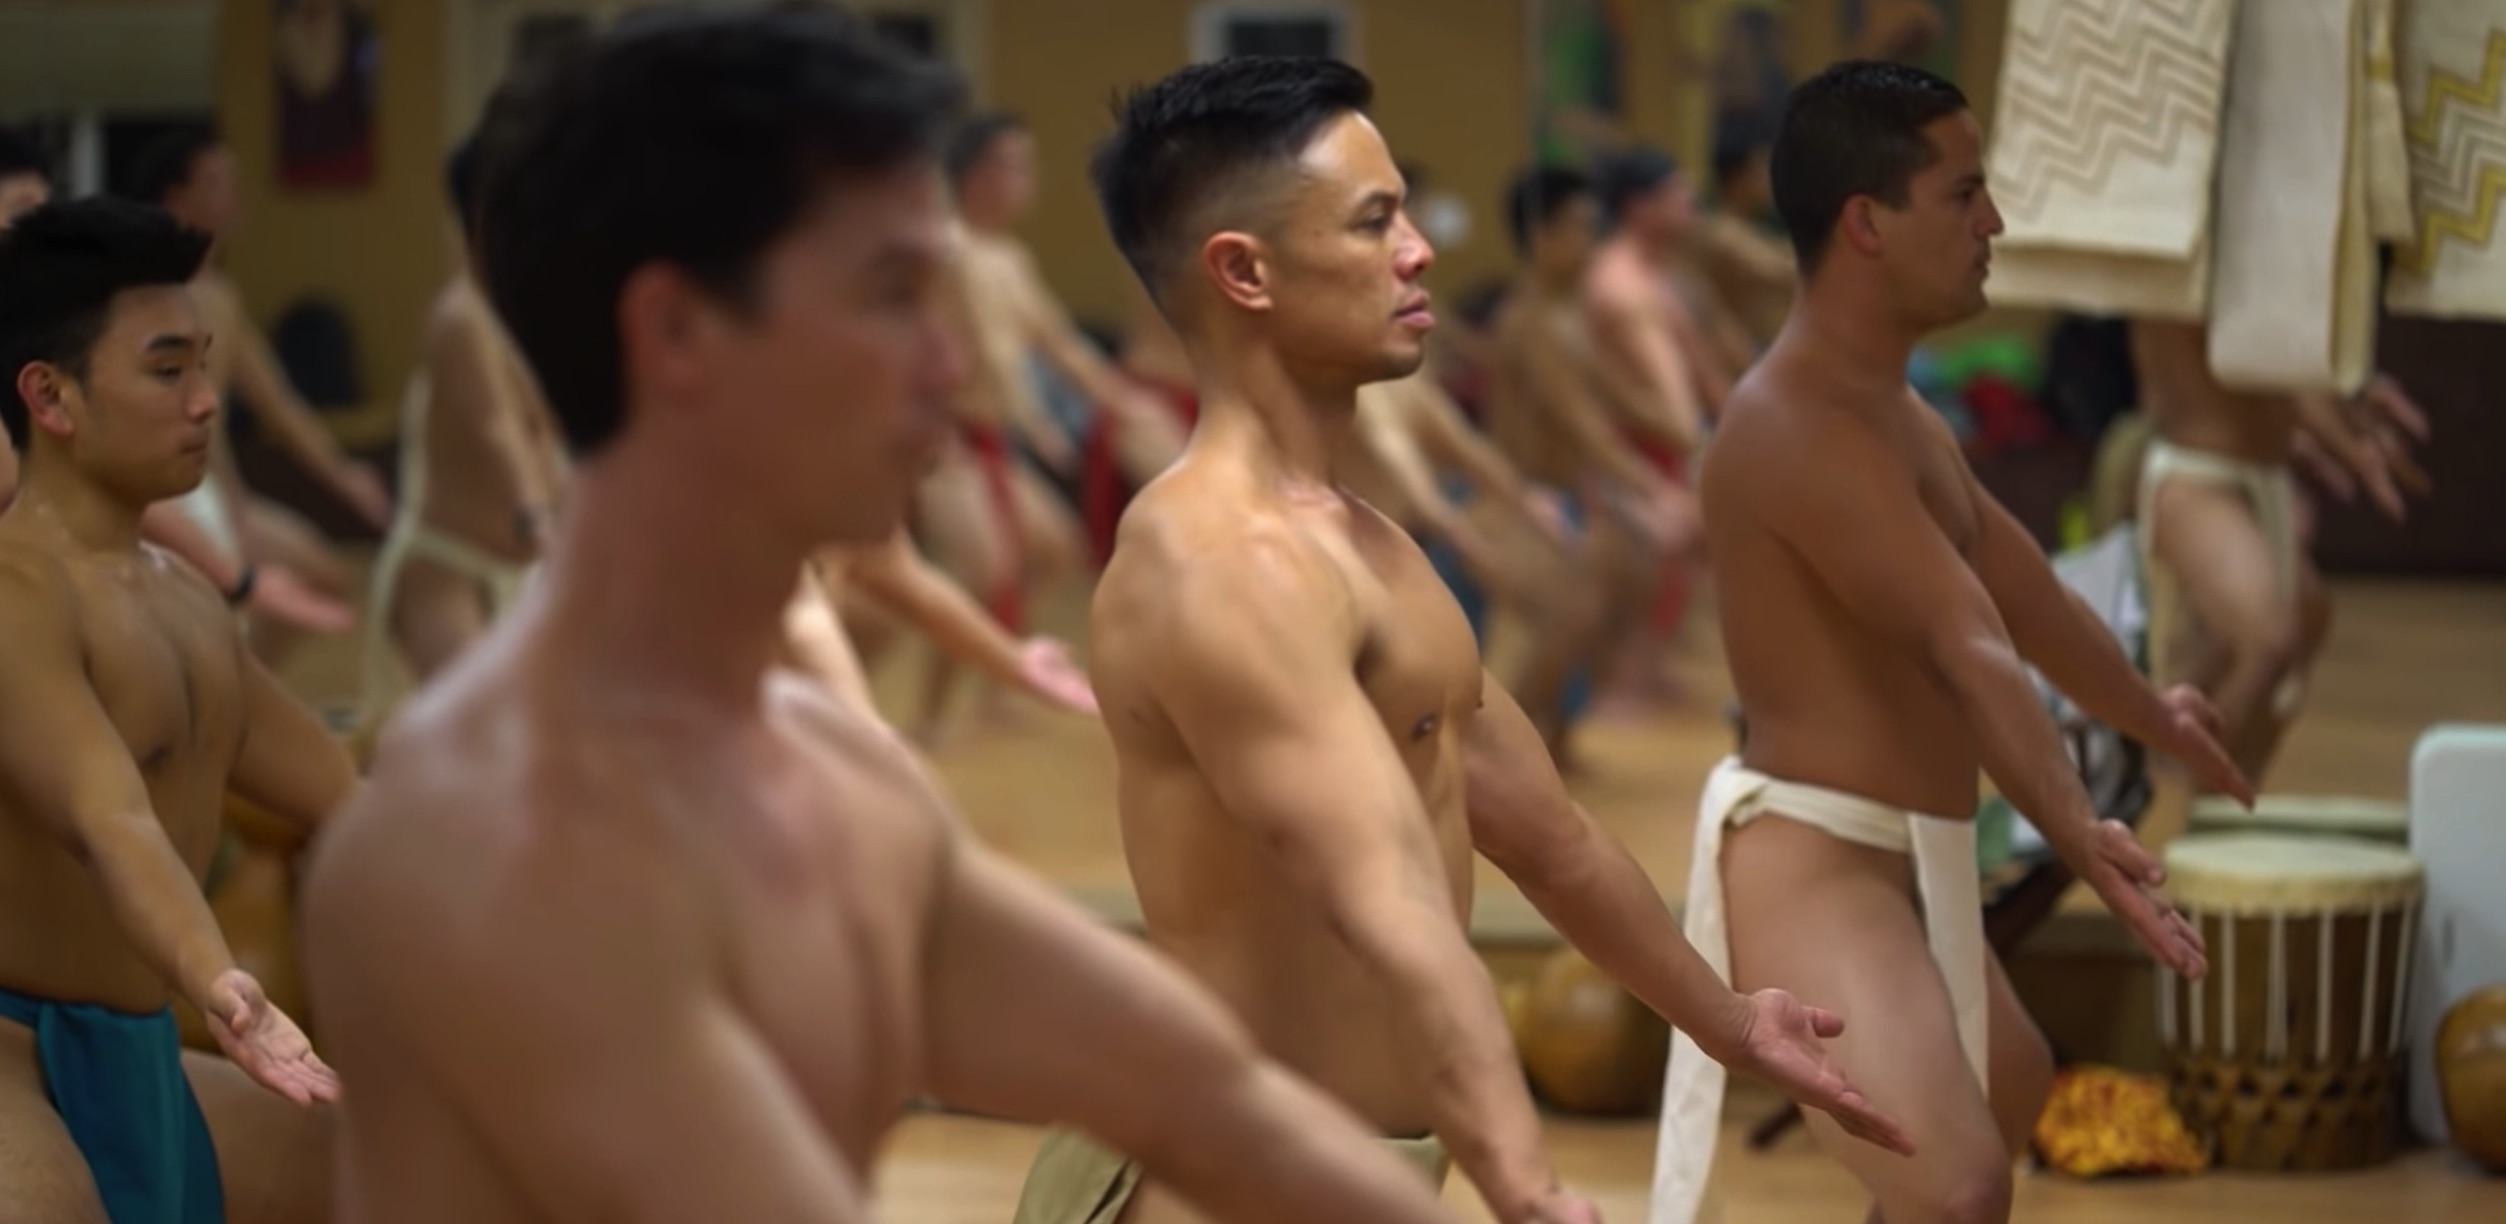 Beautiful men rehearse hula dancing (brief, no sex) - ThisVid.com